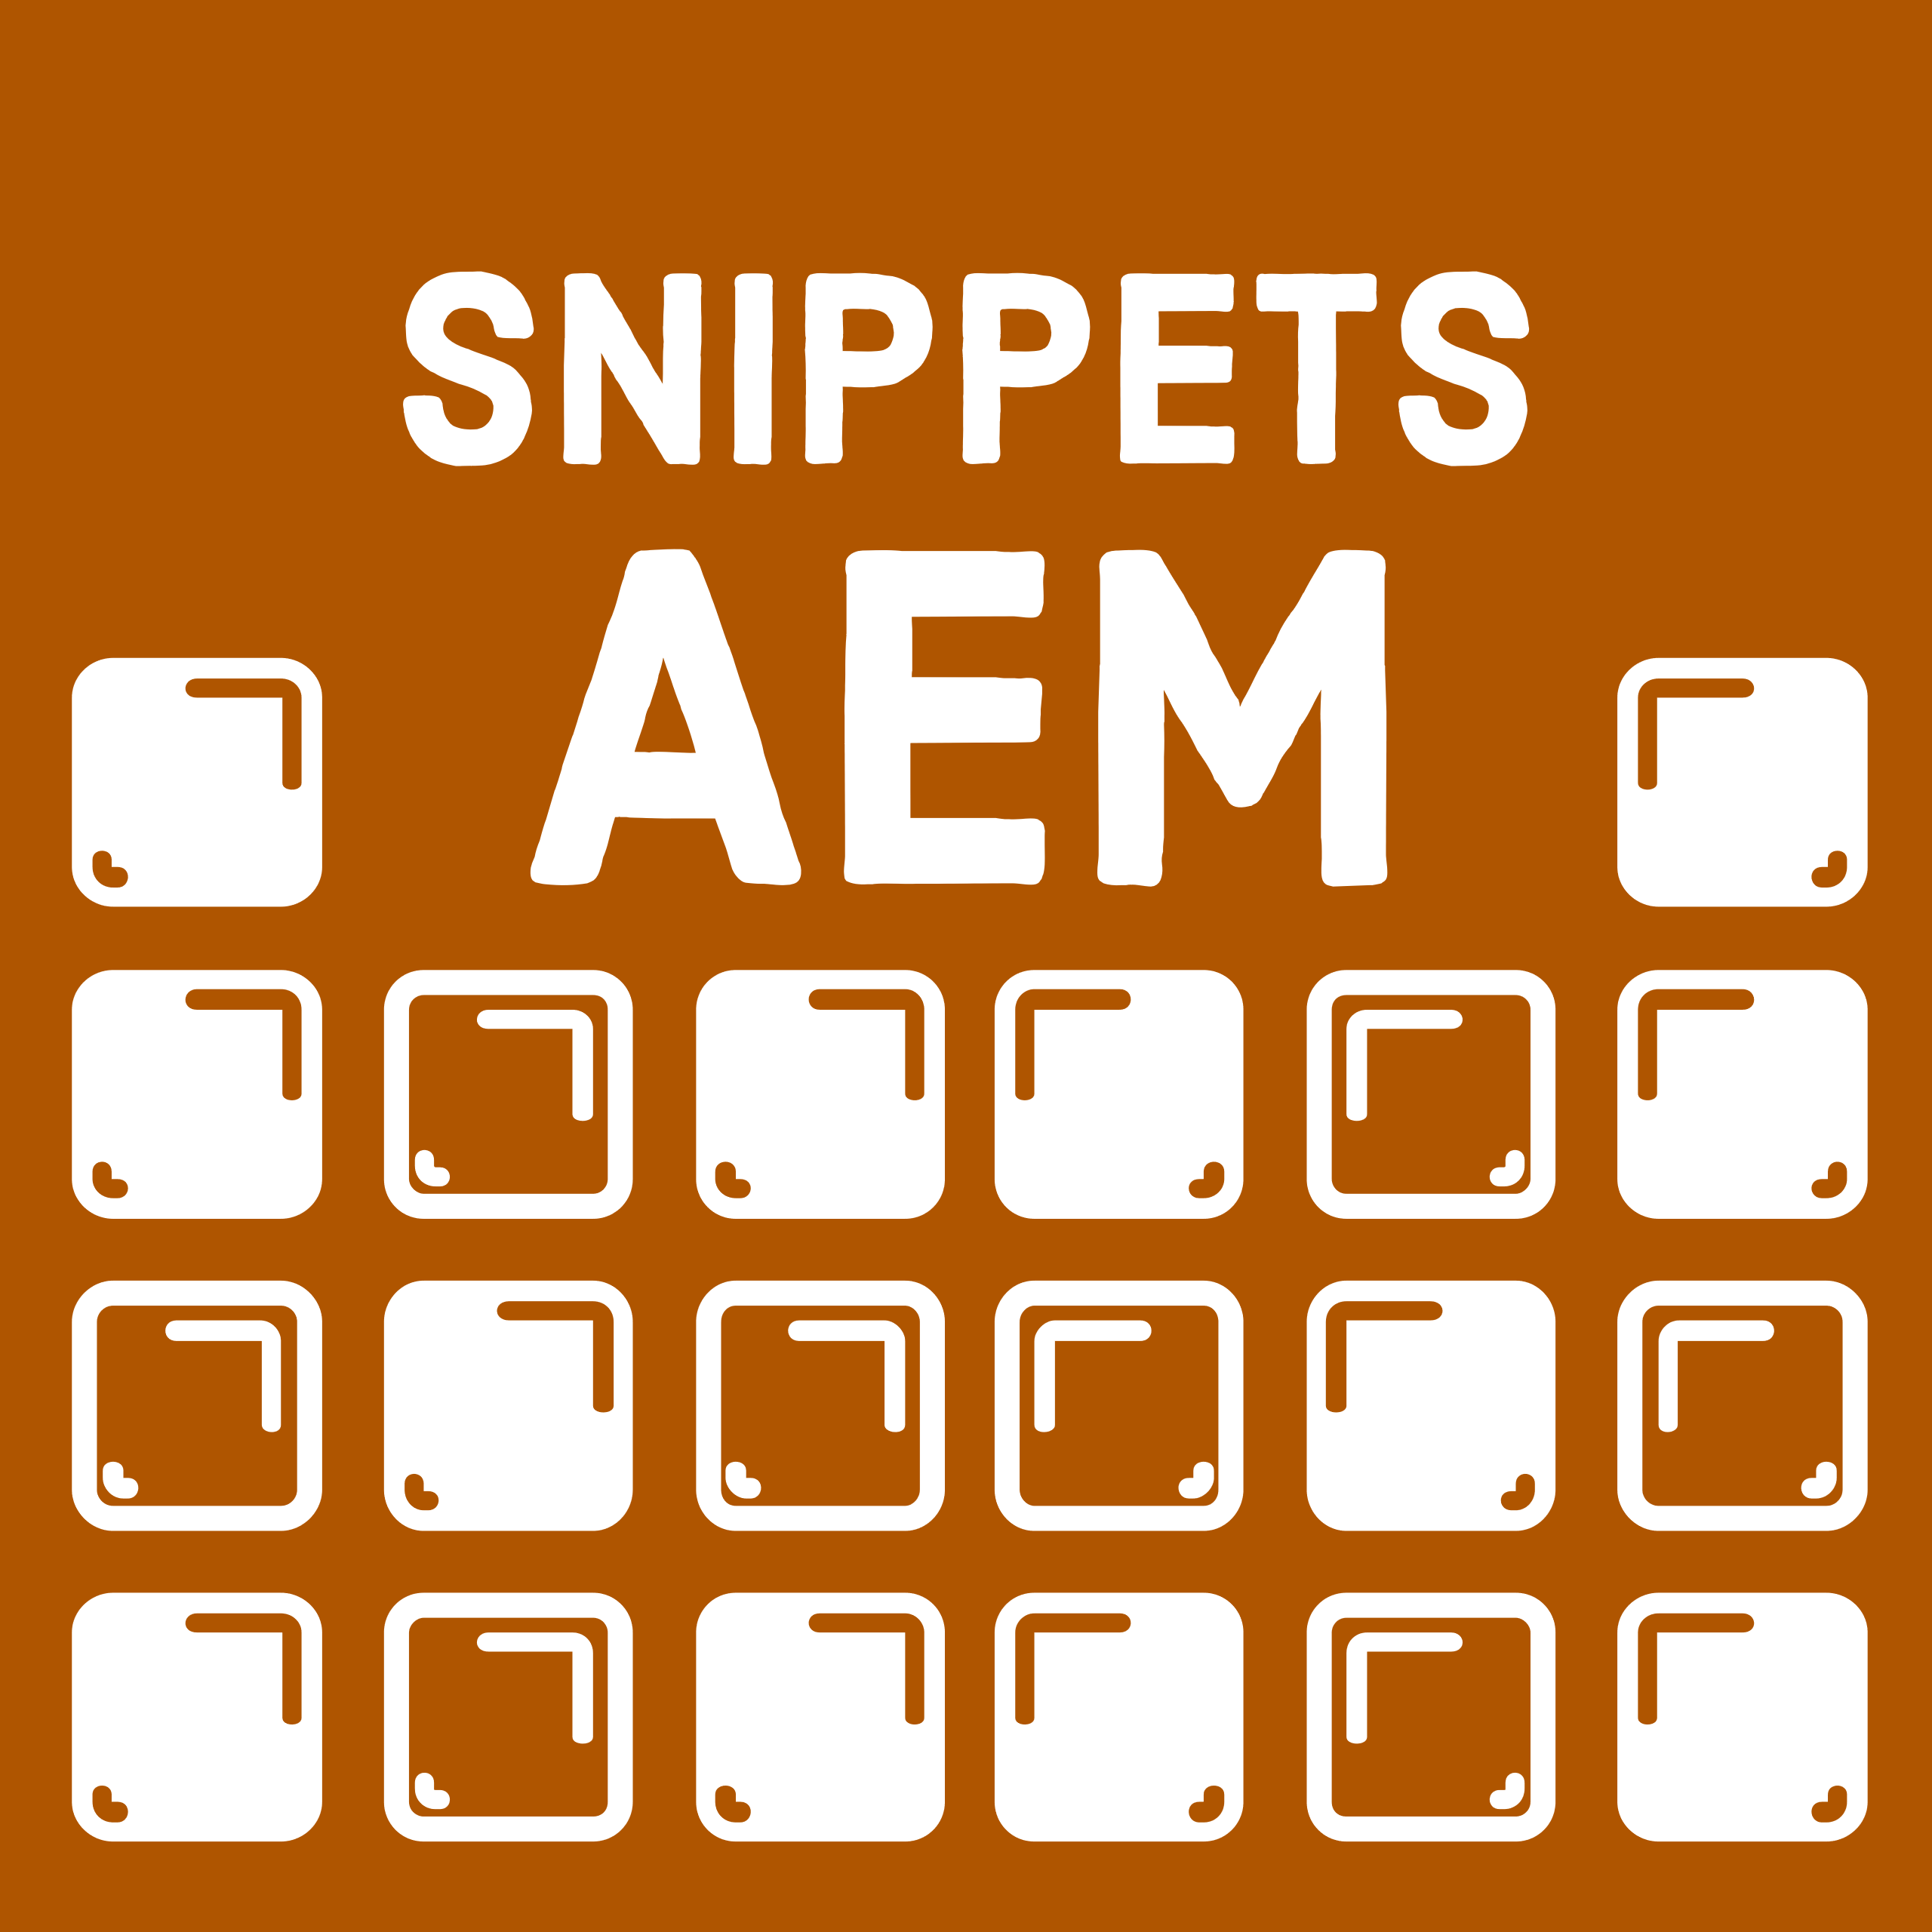 AEM Snippets